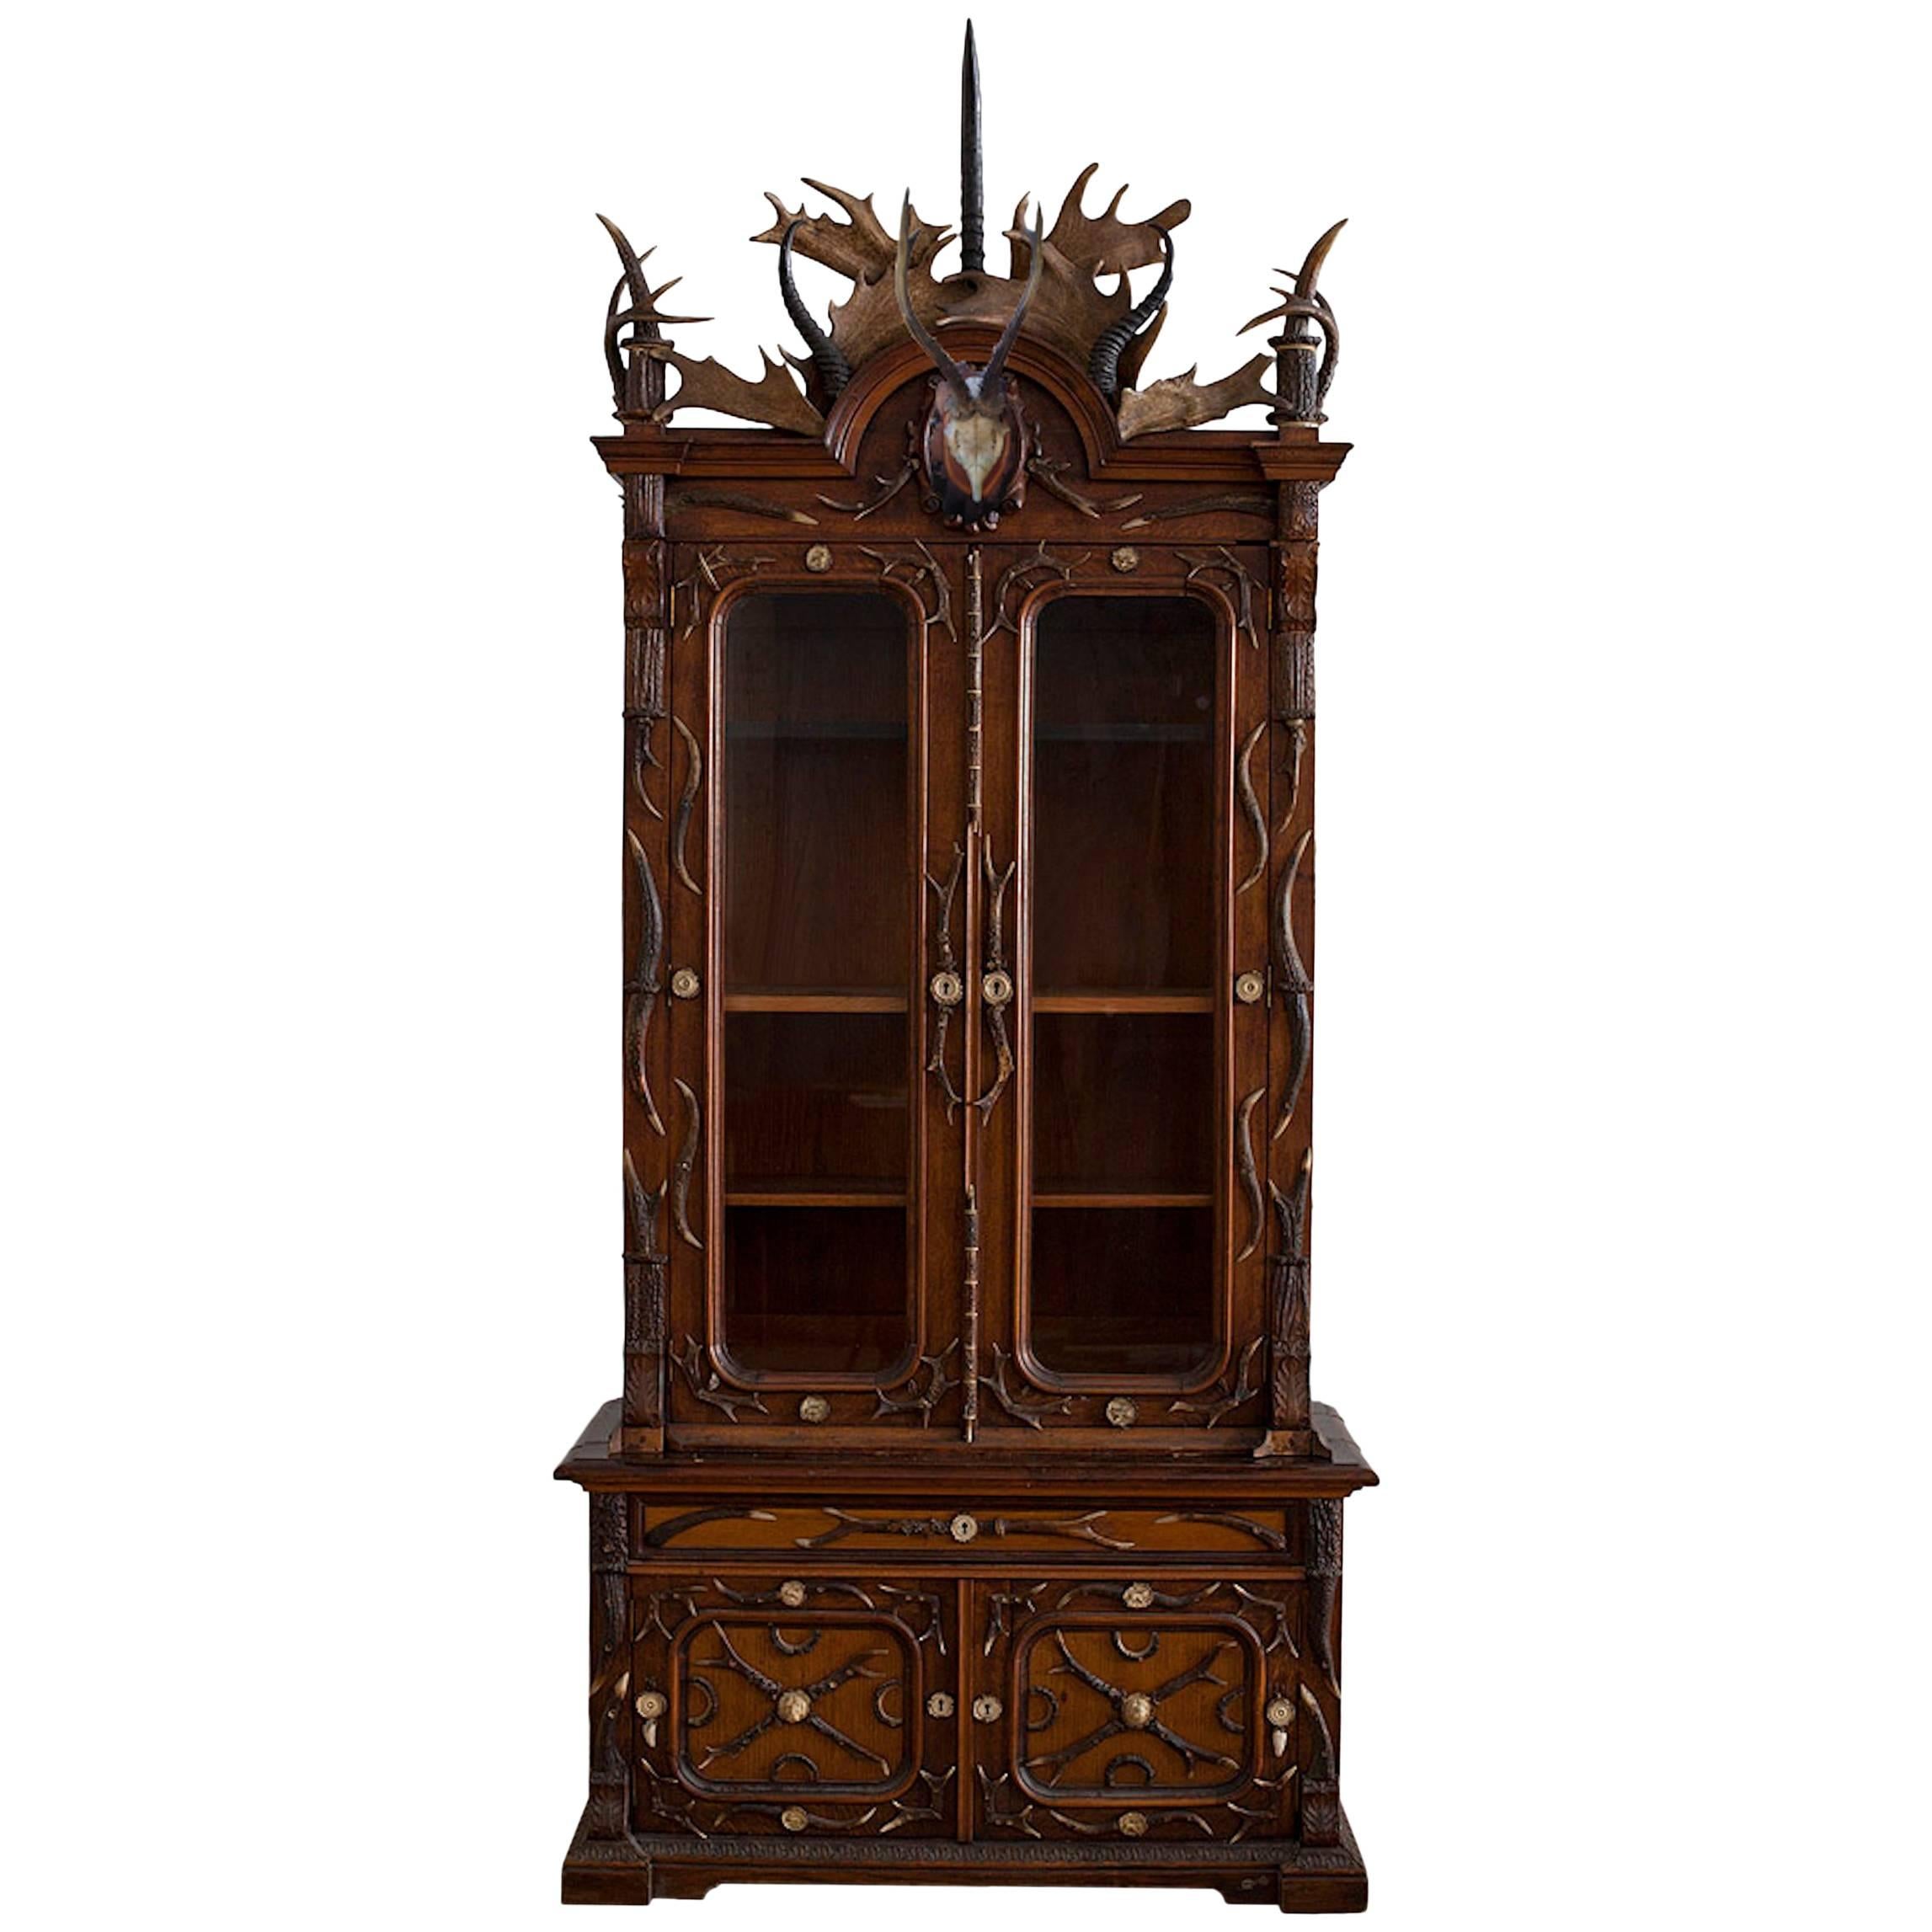 German Fantasy Historic Revival Hunting Trophy Cabinet, Circa 1870